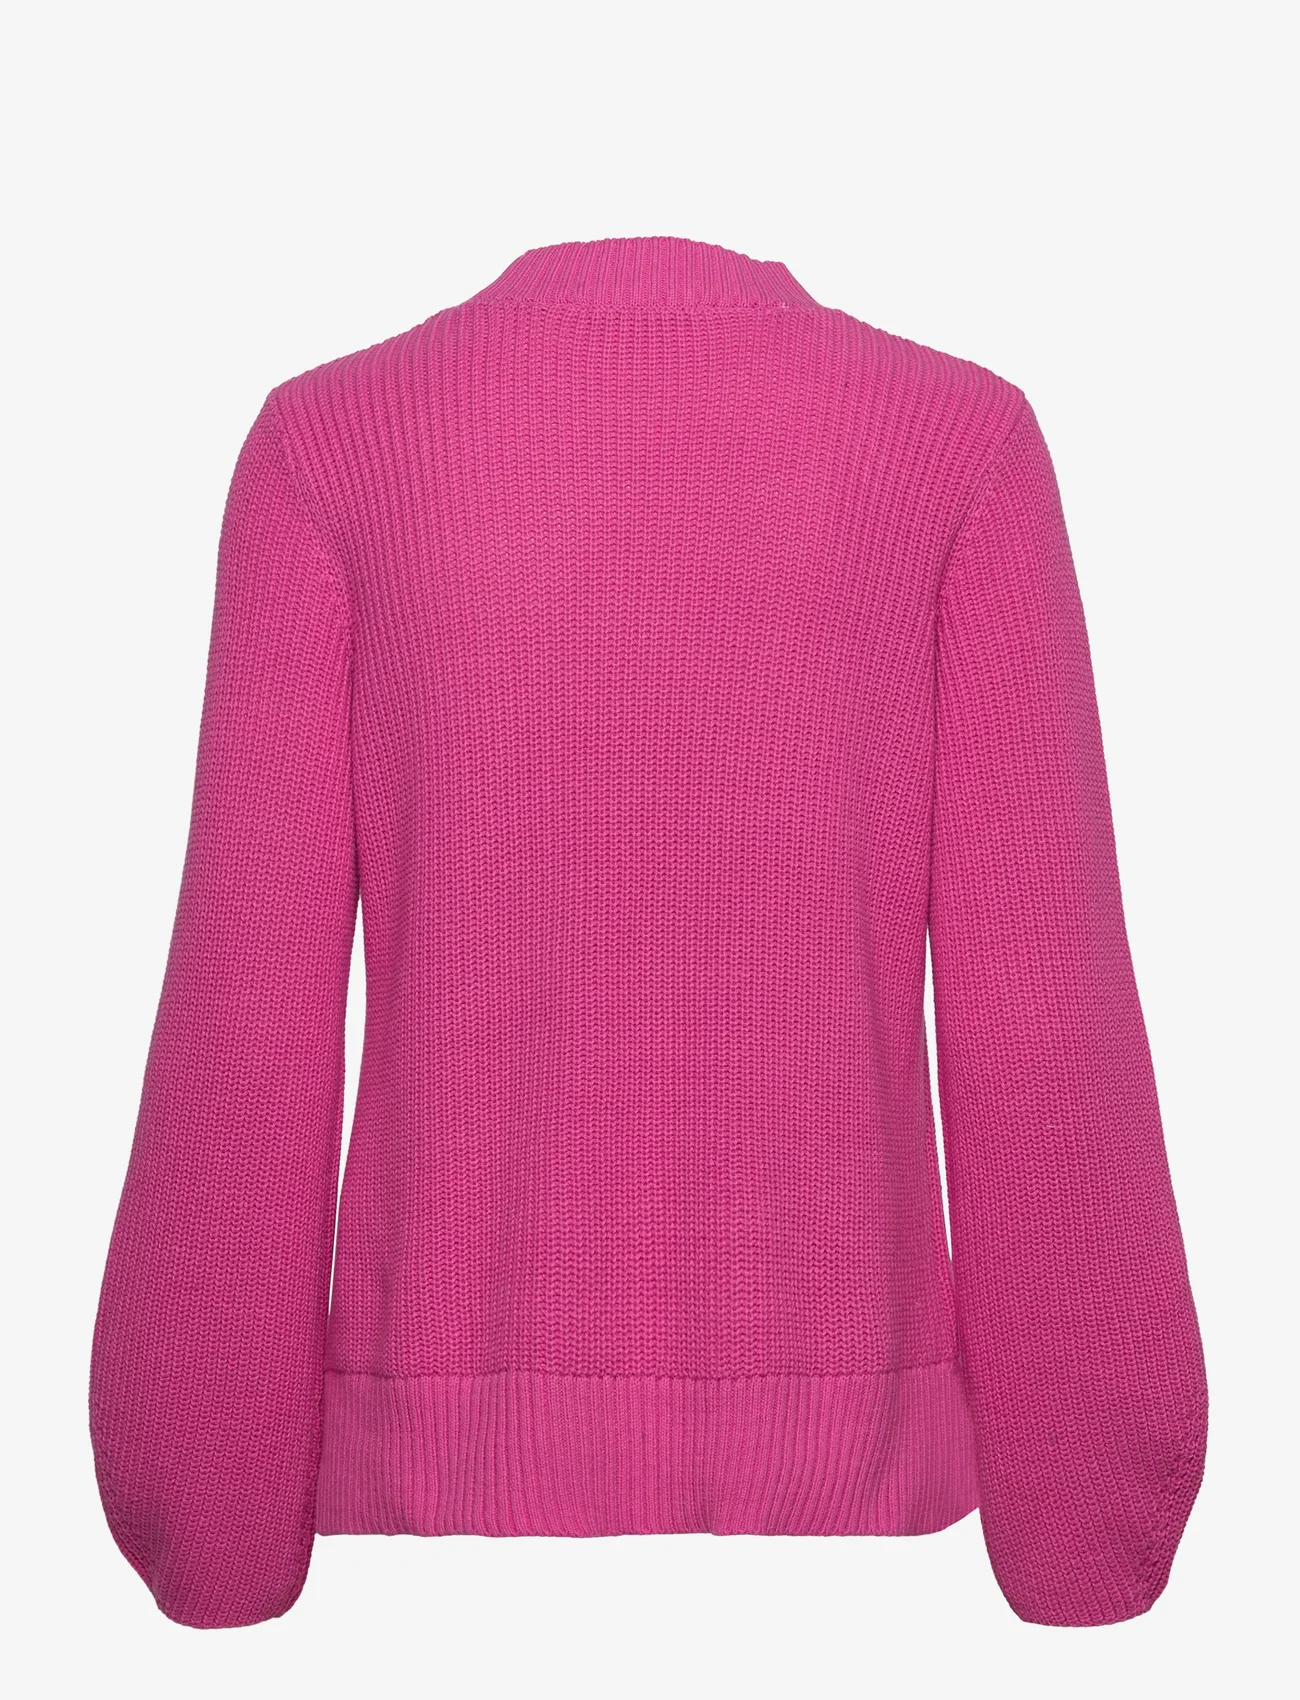 Selected Femme - SLFLESLIE LS KNIT O-NECK B - pullover - phlox pink - 1